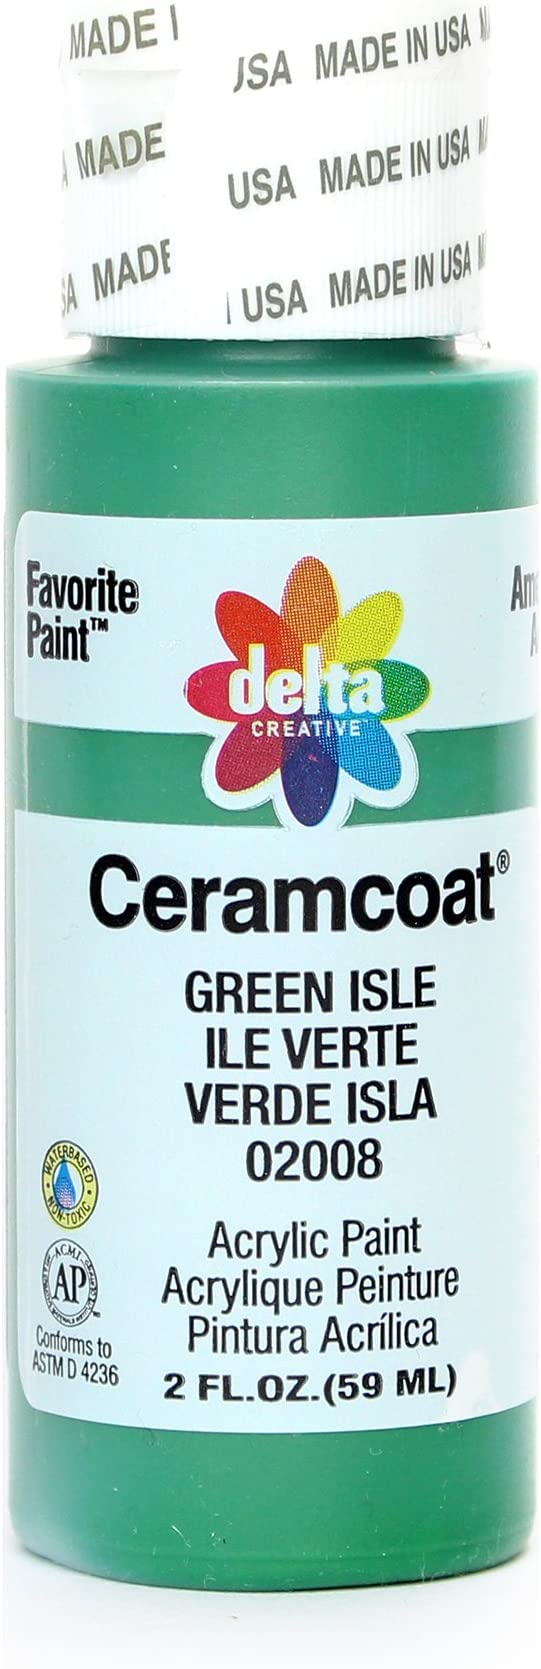 CERAMCOAT Acrylic Paint 59ml 2floz  - Green Isle